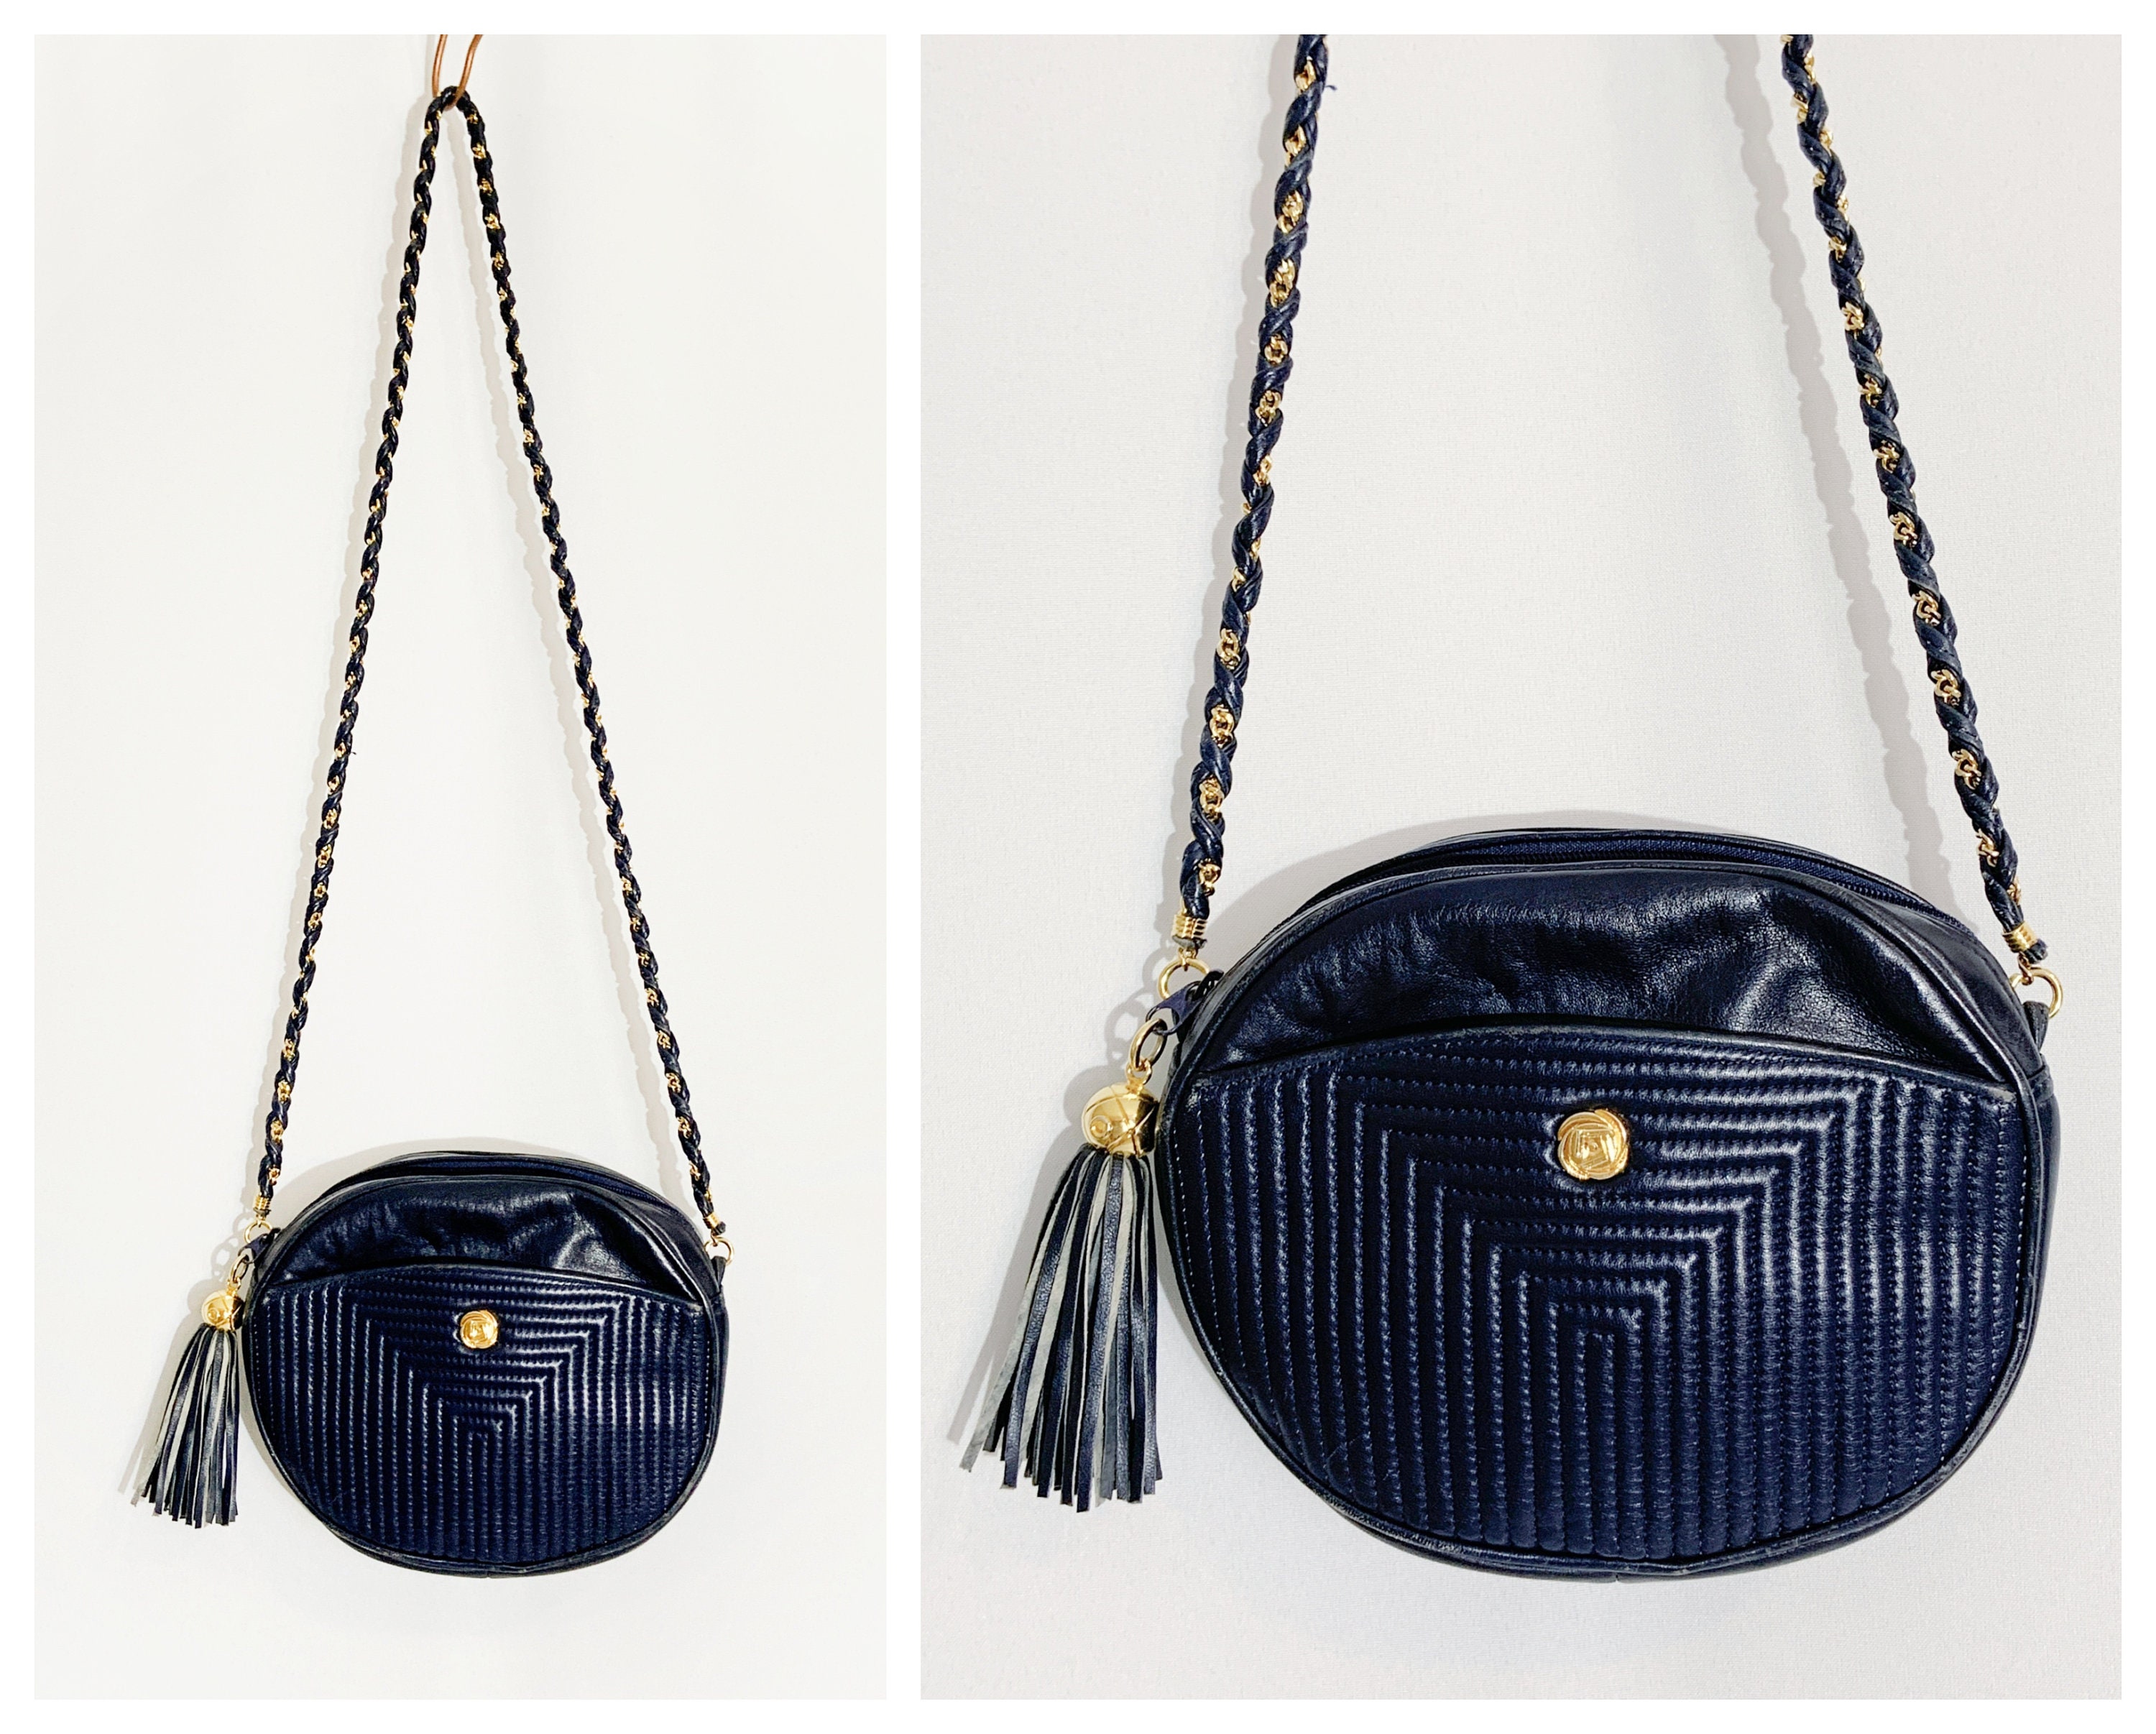 Chanel Tweed Clover Bowler Satchel - FINAL SALE, Chanel Handbags